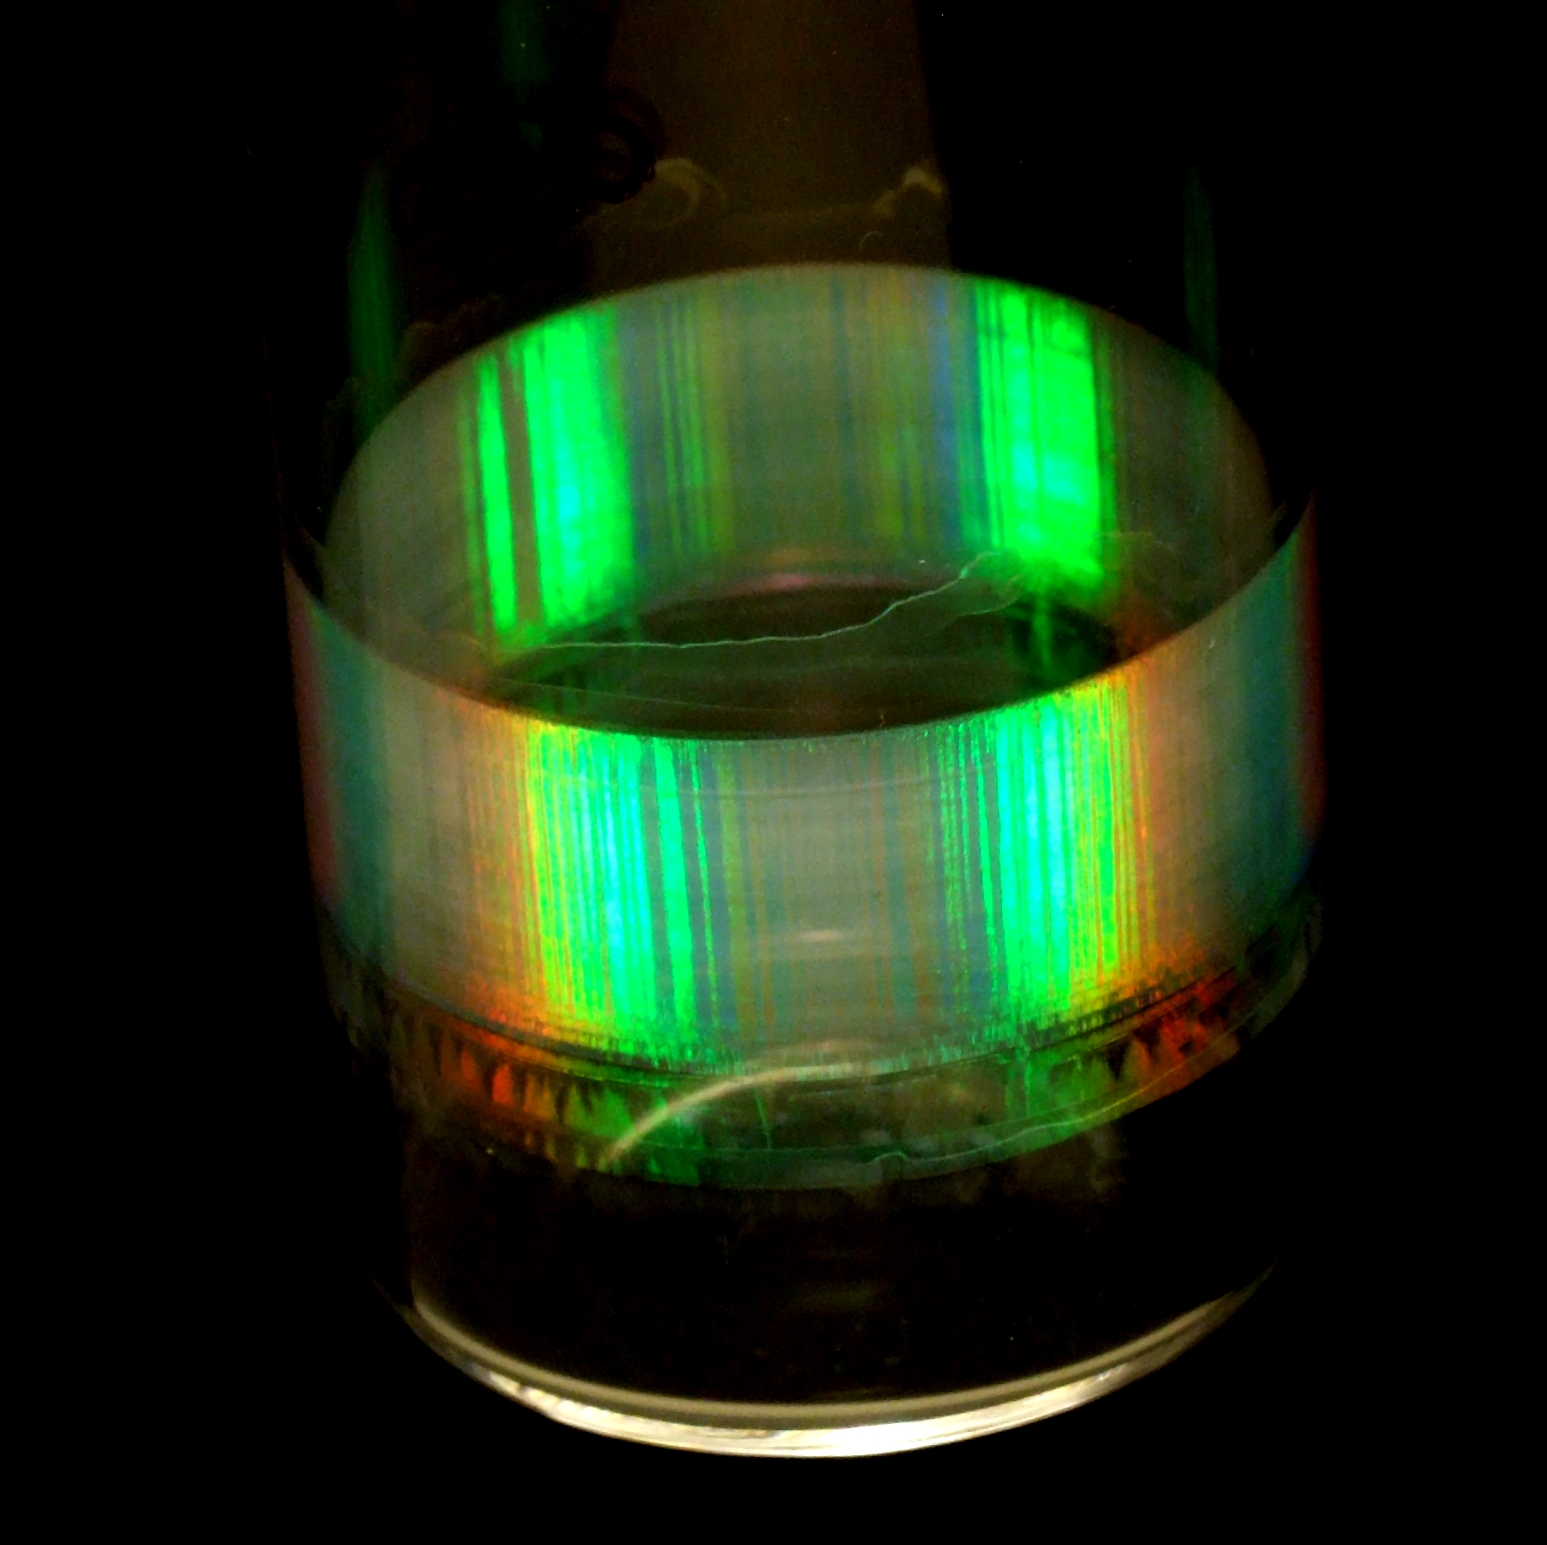 Digital photograph of synthetic opal under white-light illumination.